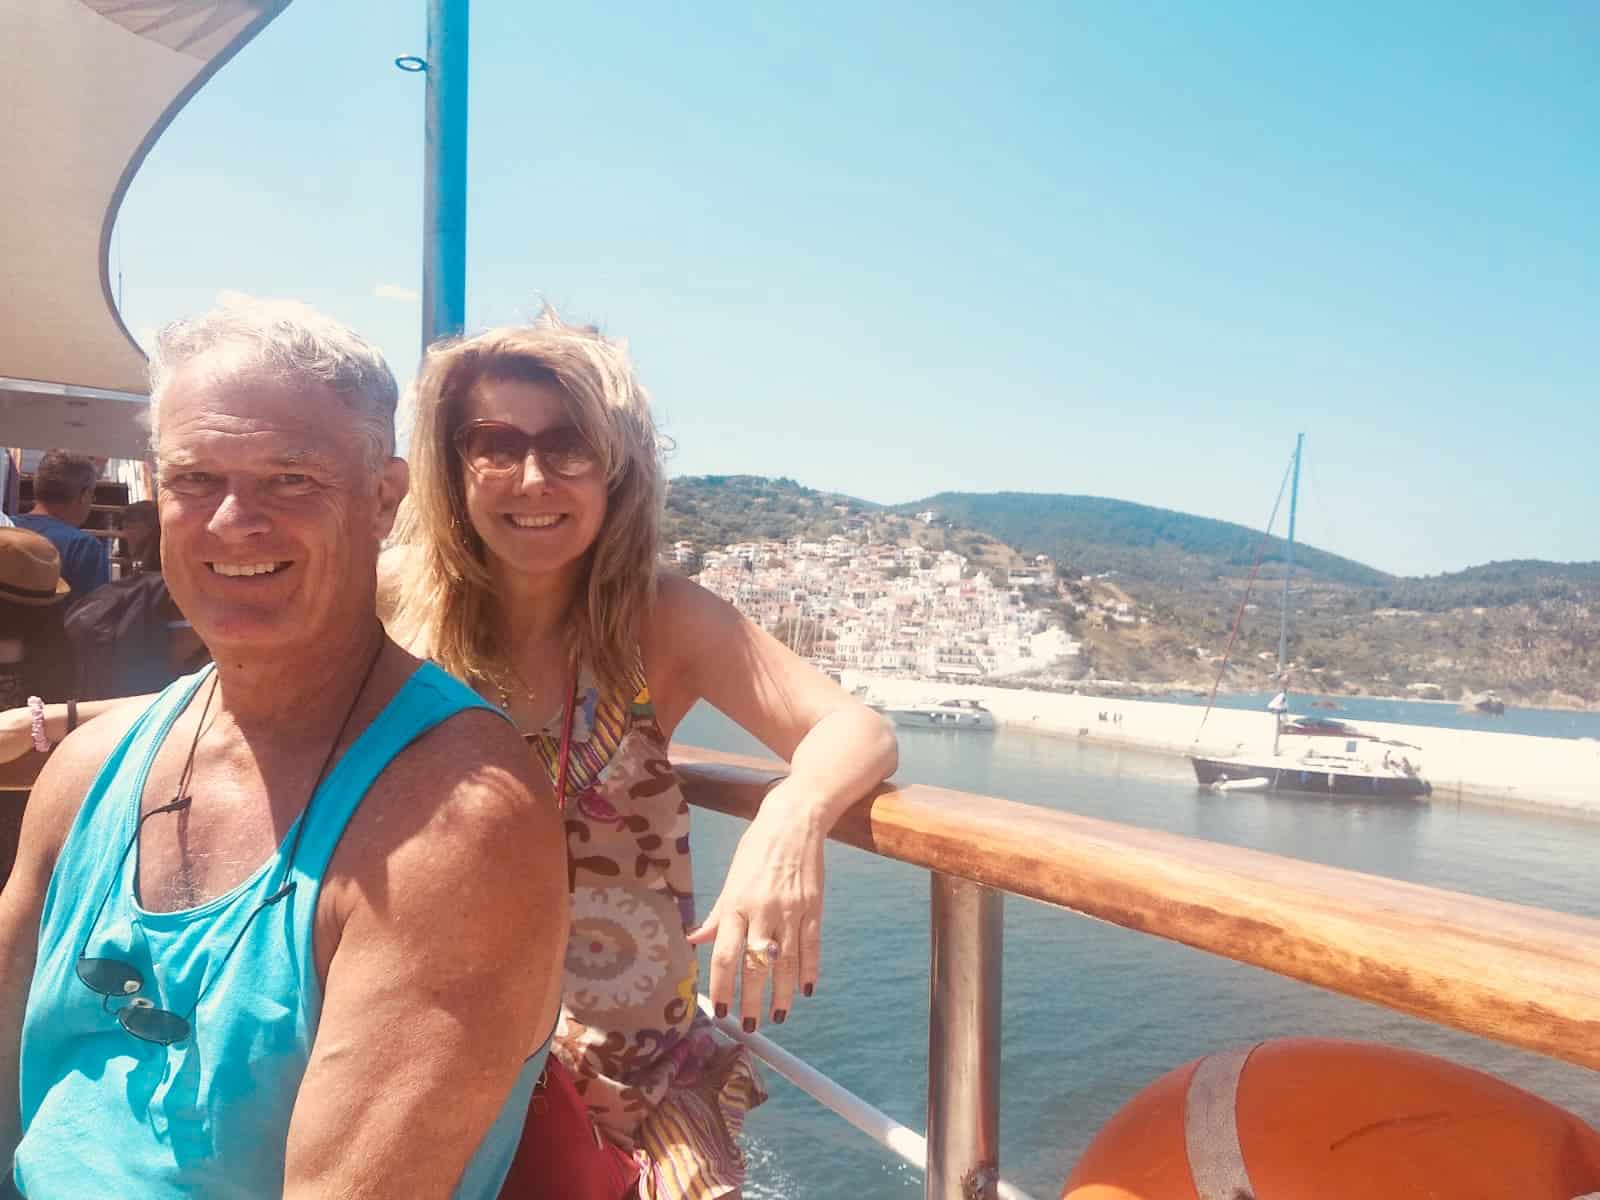 On the Greek ferry between Skiathos and Skopelos.